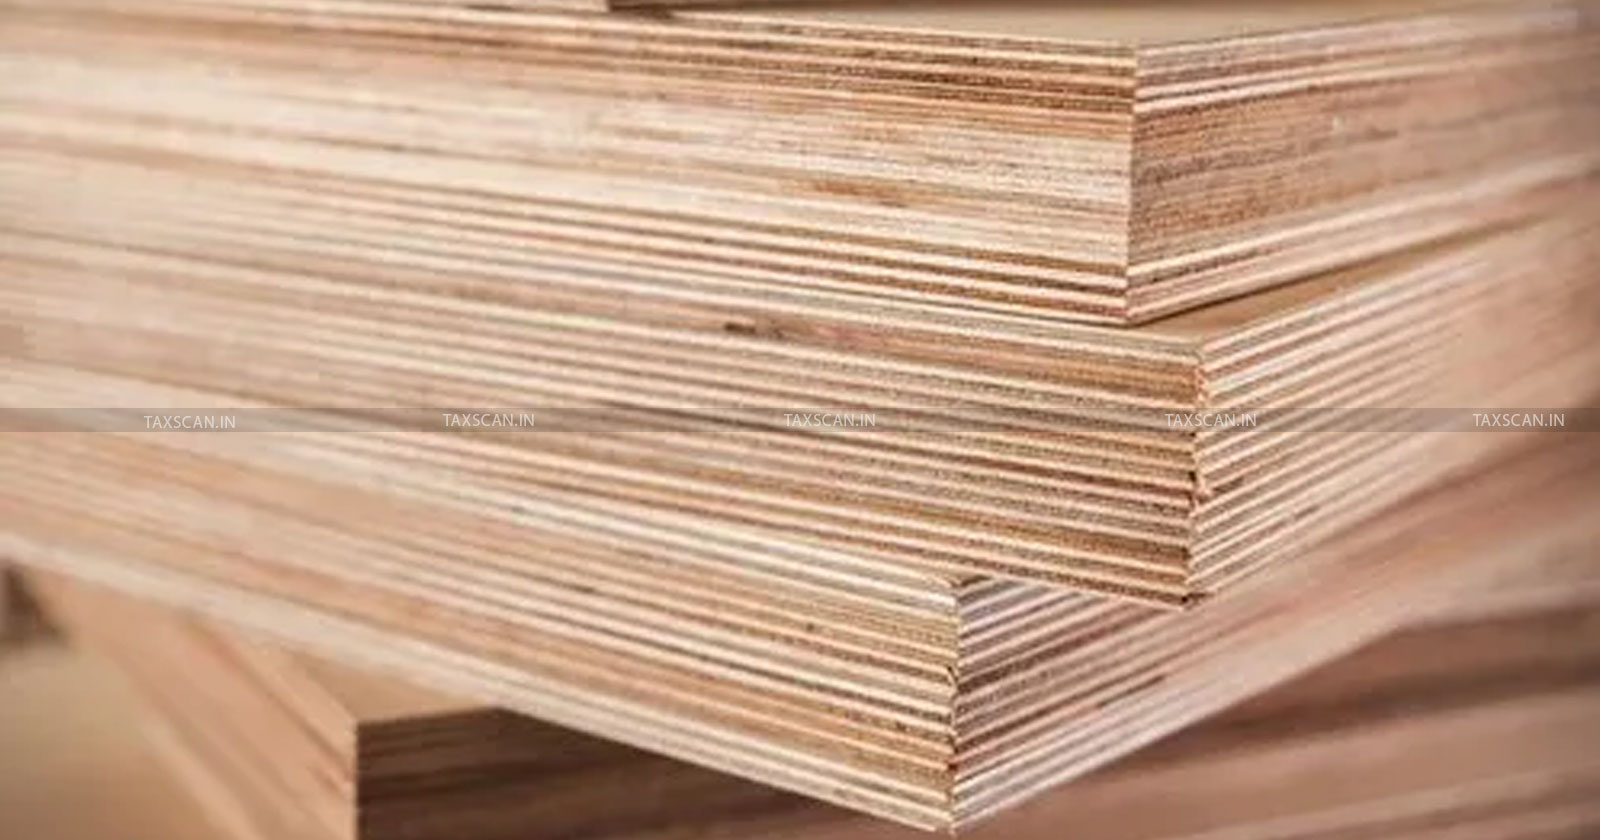 Resin Treated Compressed Wood Laminates - Compressed Wood Laminates - Wood Laminates - Quality Control Order for Wood Laminates - Taxscan